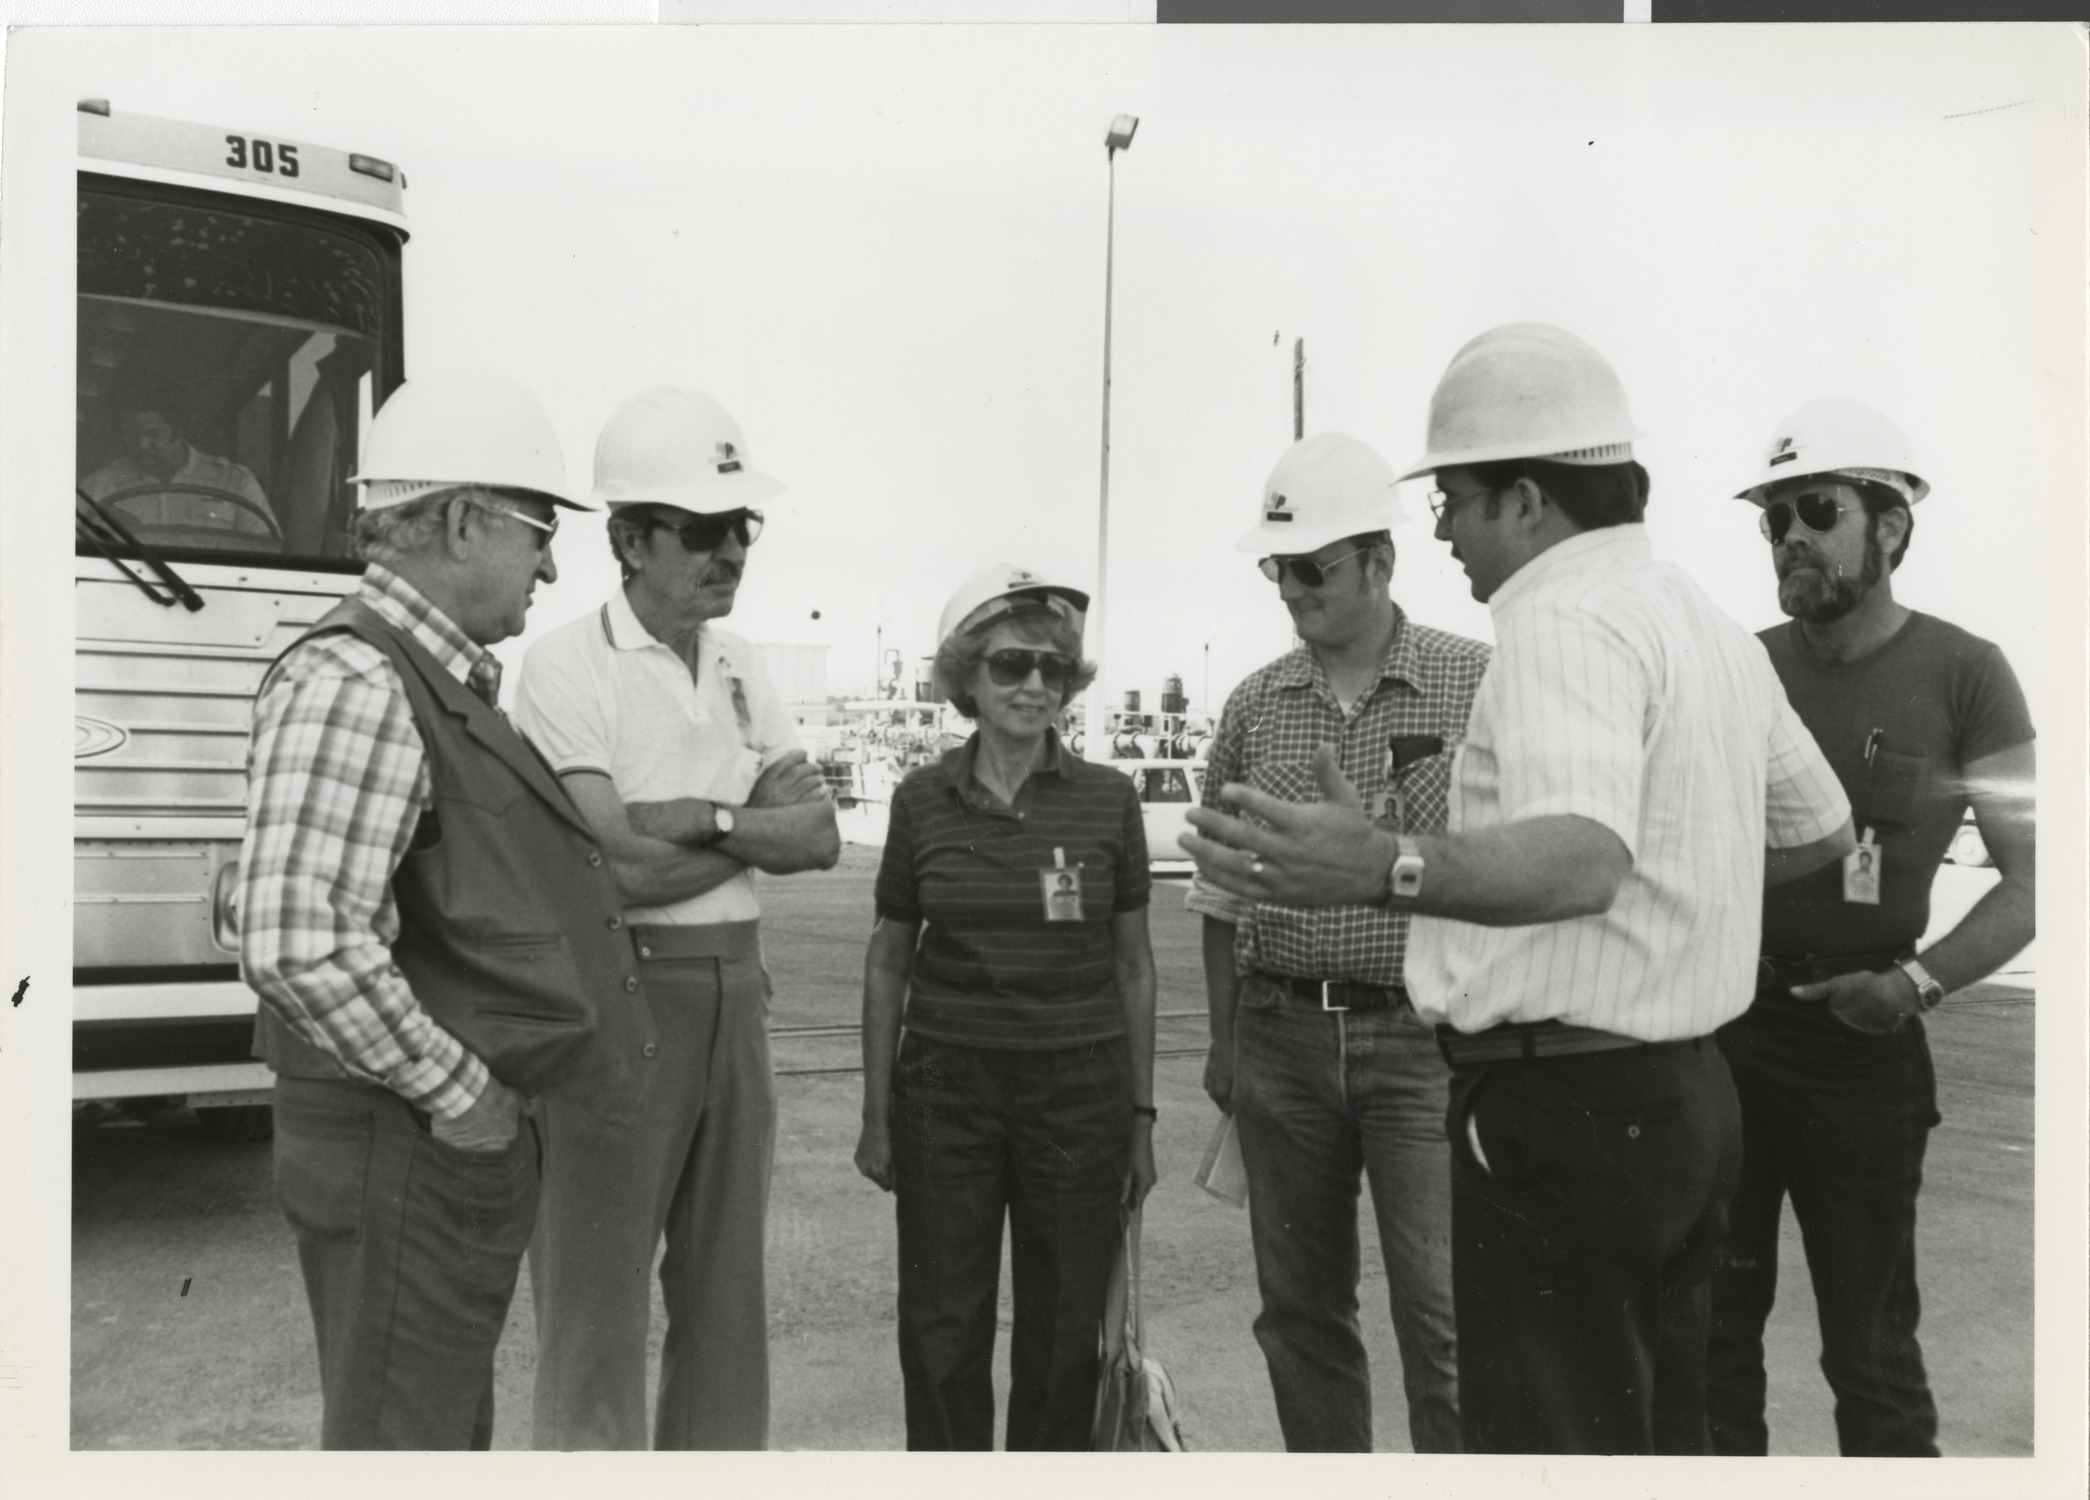 Mojave Power Plant, May 1984